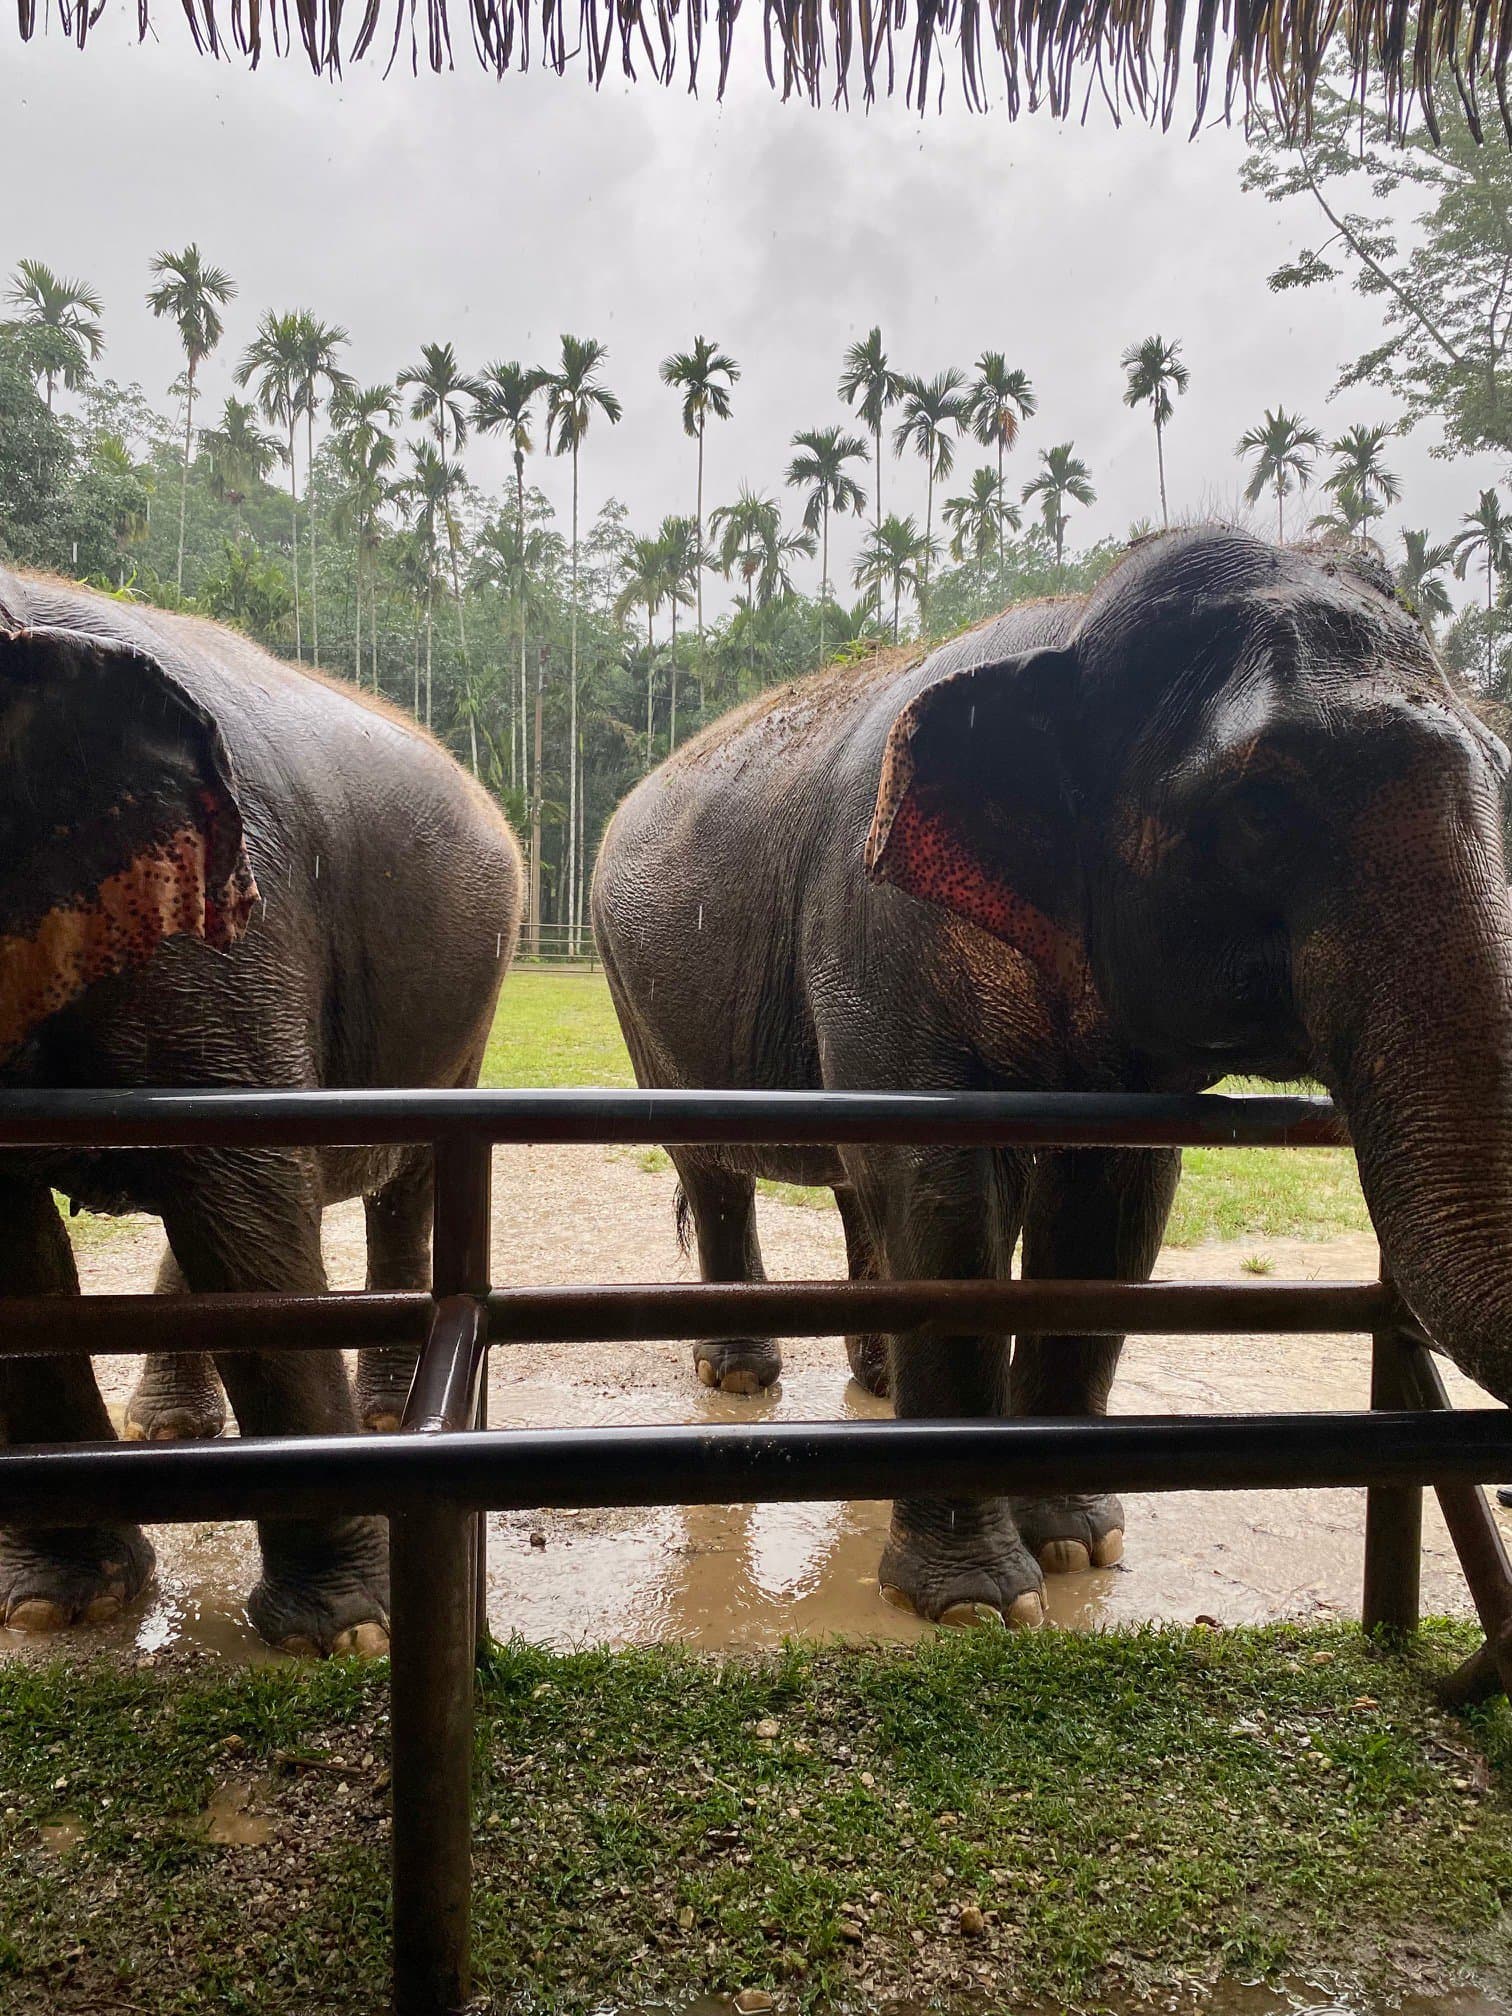 Resident Elephants at Elephant Hills in Khao Sok National Park